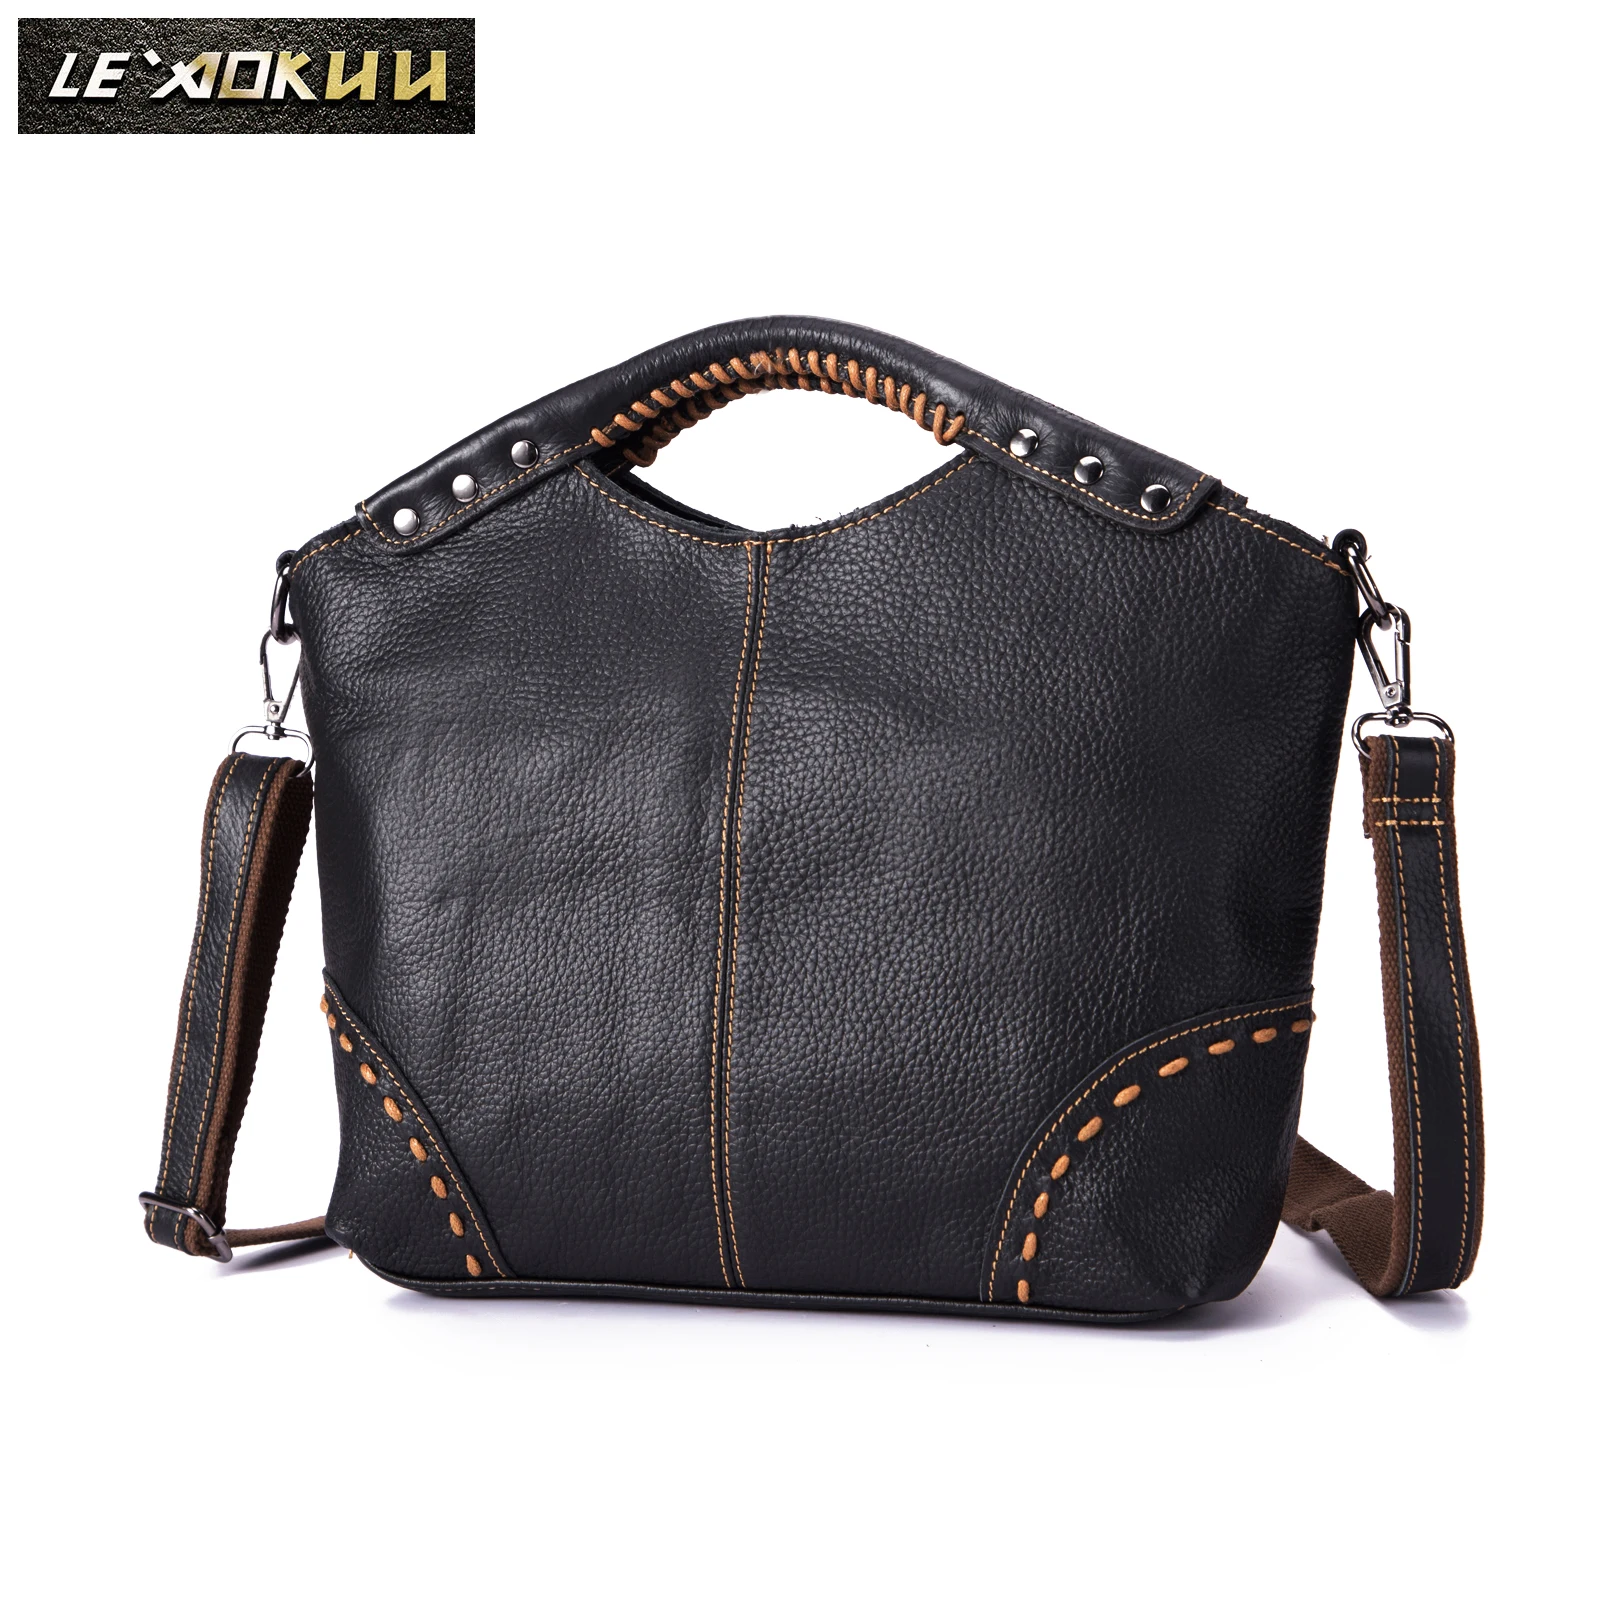 

Real LEATHER Famous Brand High Quality Luxury Ladies Casual Design handbag Shoulder bag Women female ol elegant Tote bag 6640-b